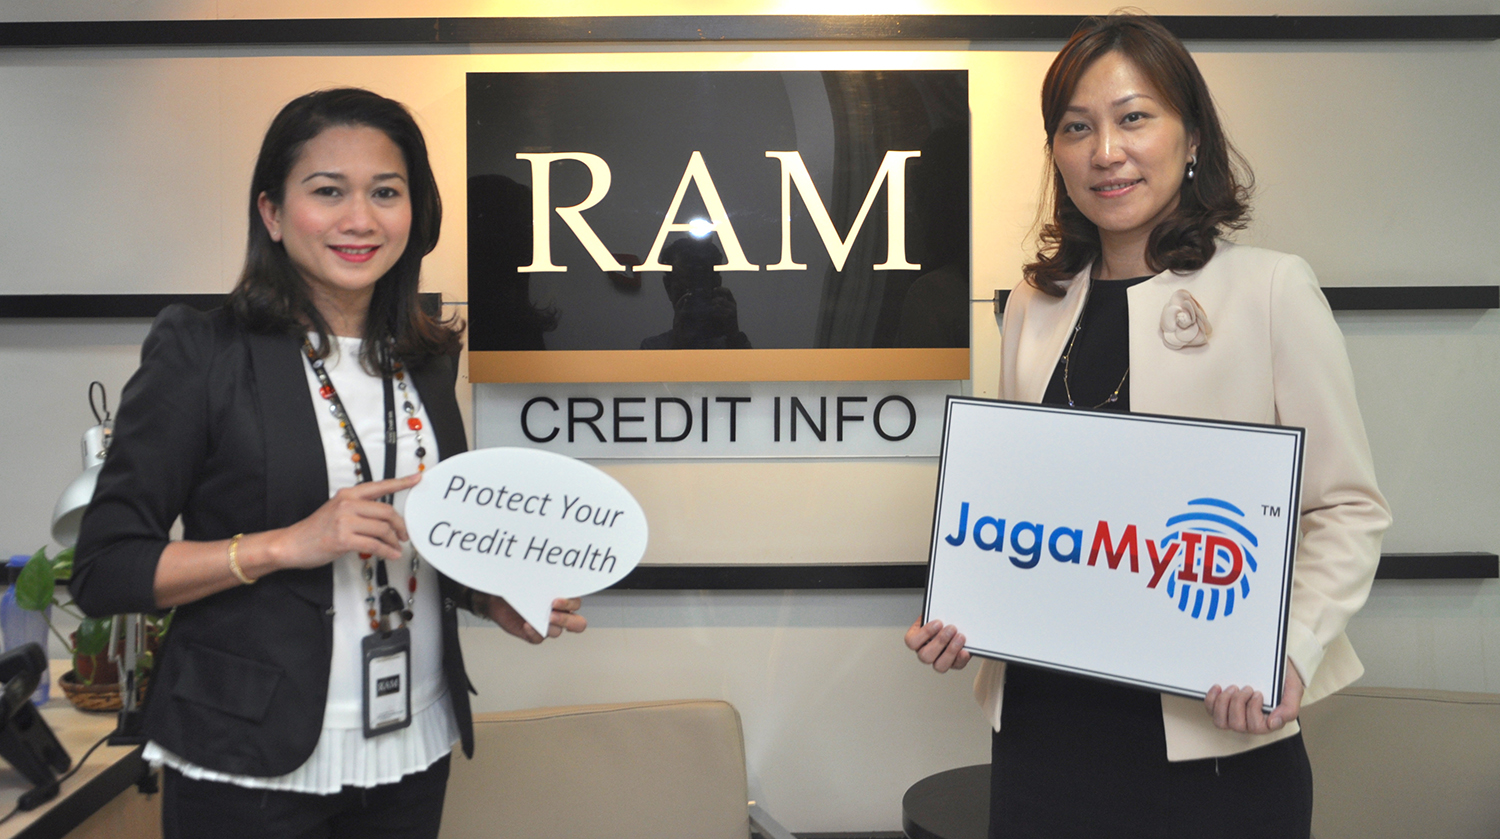 RAMCI’s JagaMyID helps keep credit scores, online identities safe